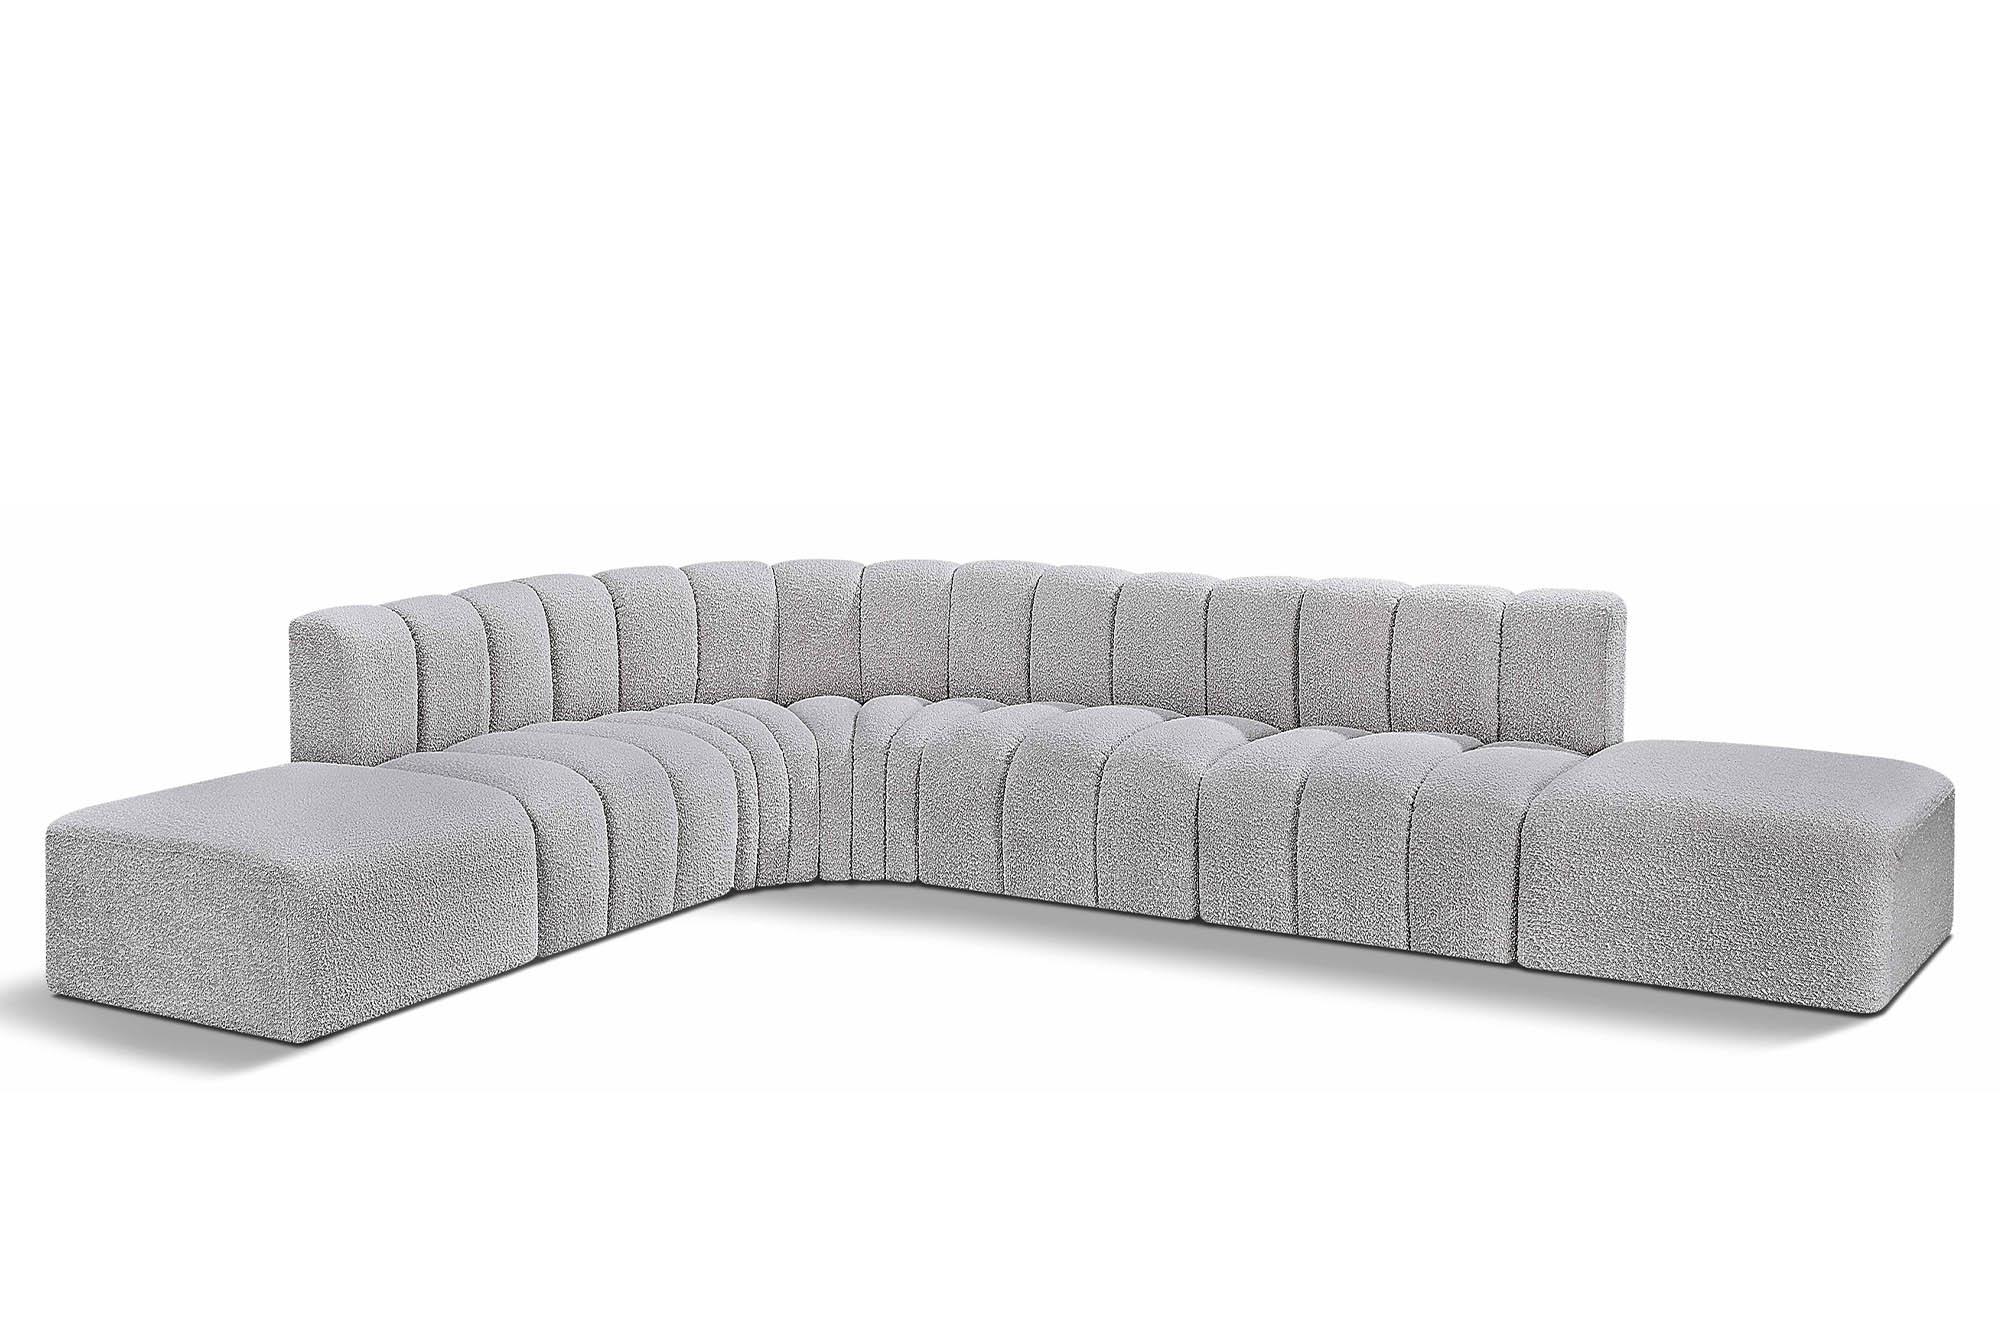 Contemporary, Modern Modular Sectional Sofa ARC 102Grey-S7A 102Grey-S7A in Gray 